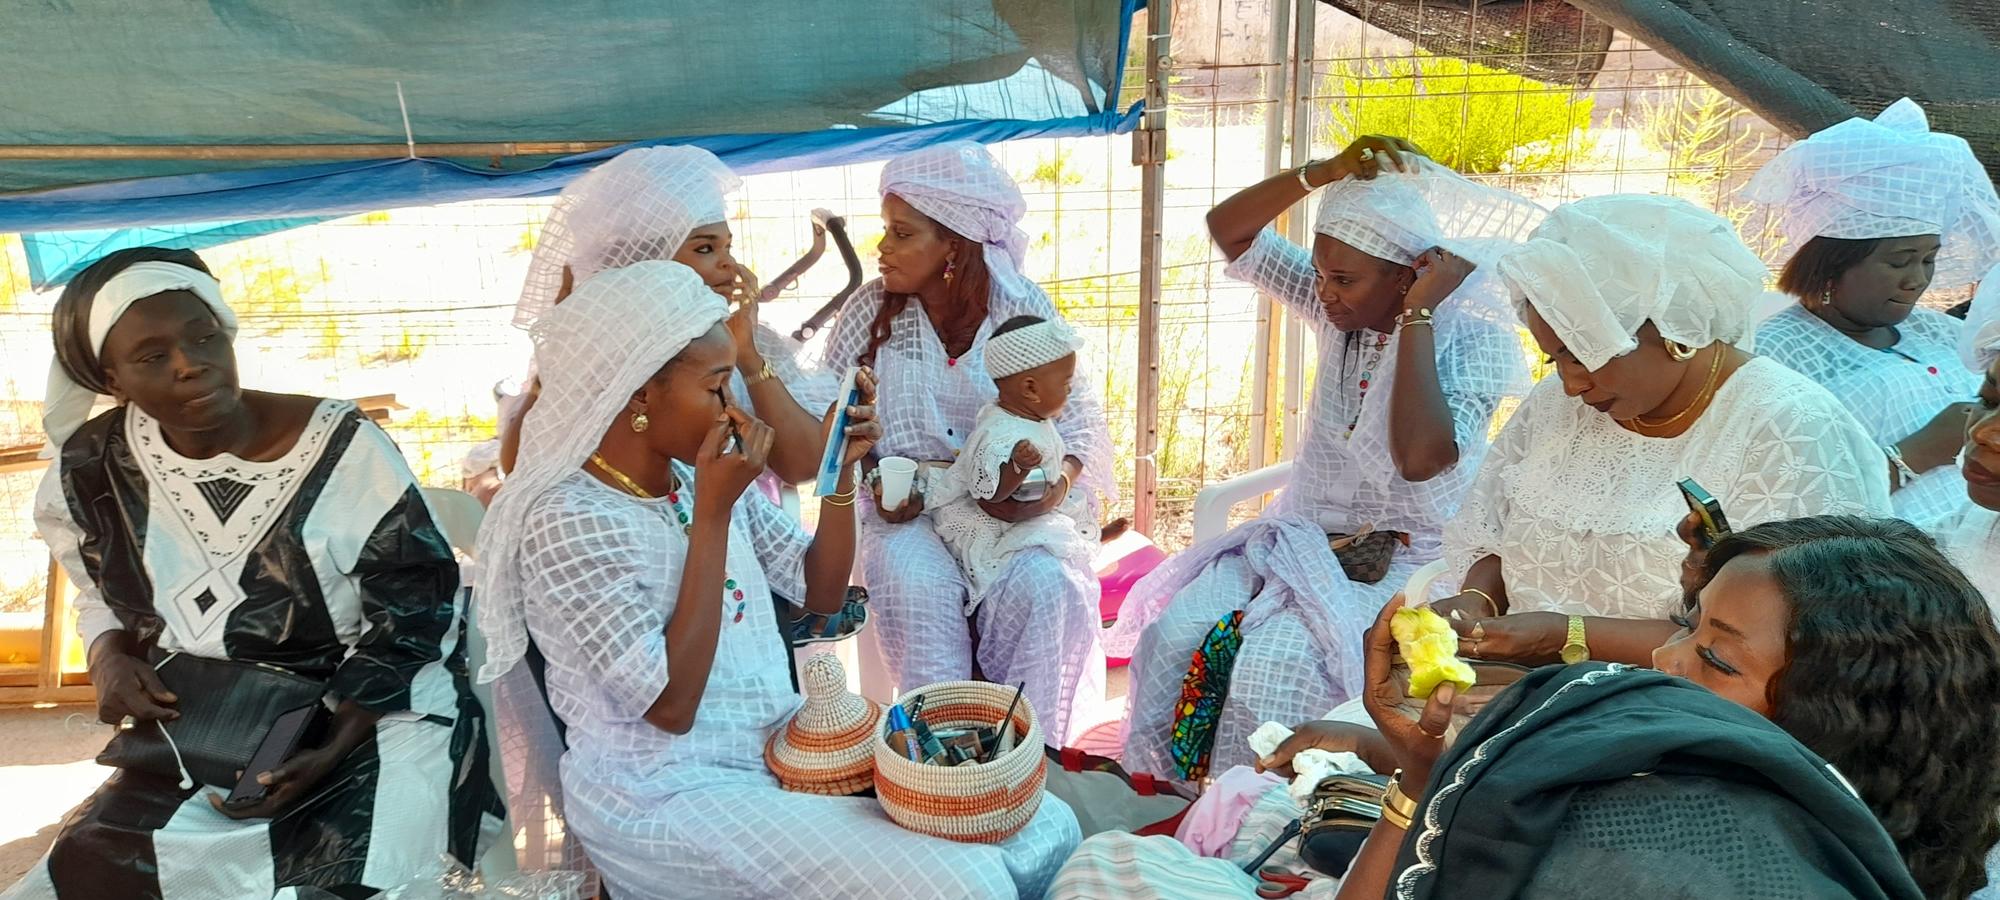 500 senegaleses se reúnen en Vinaròs por la fiesta religiosa Grand Magal